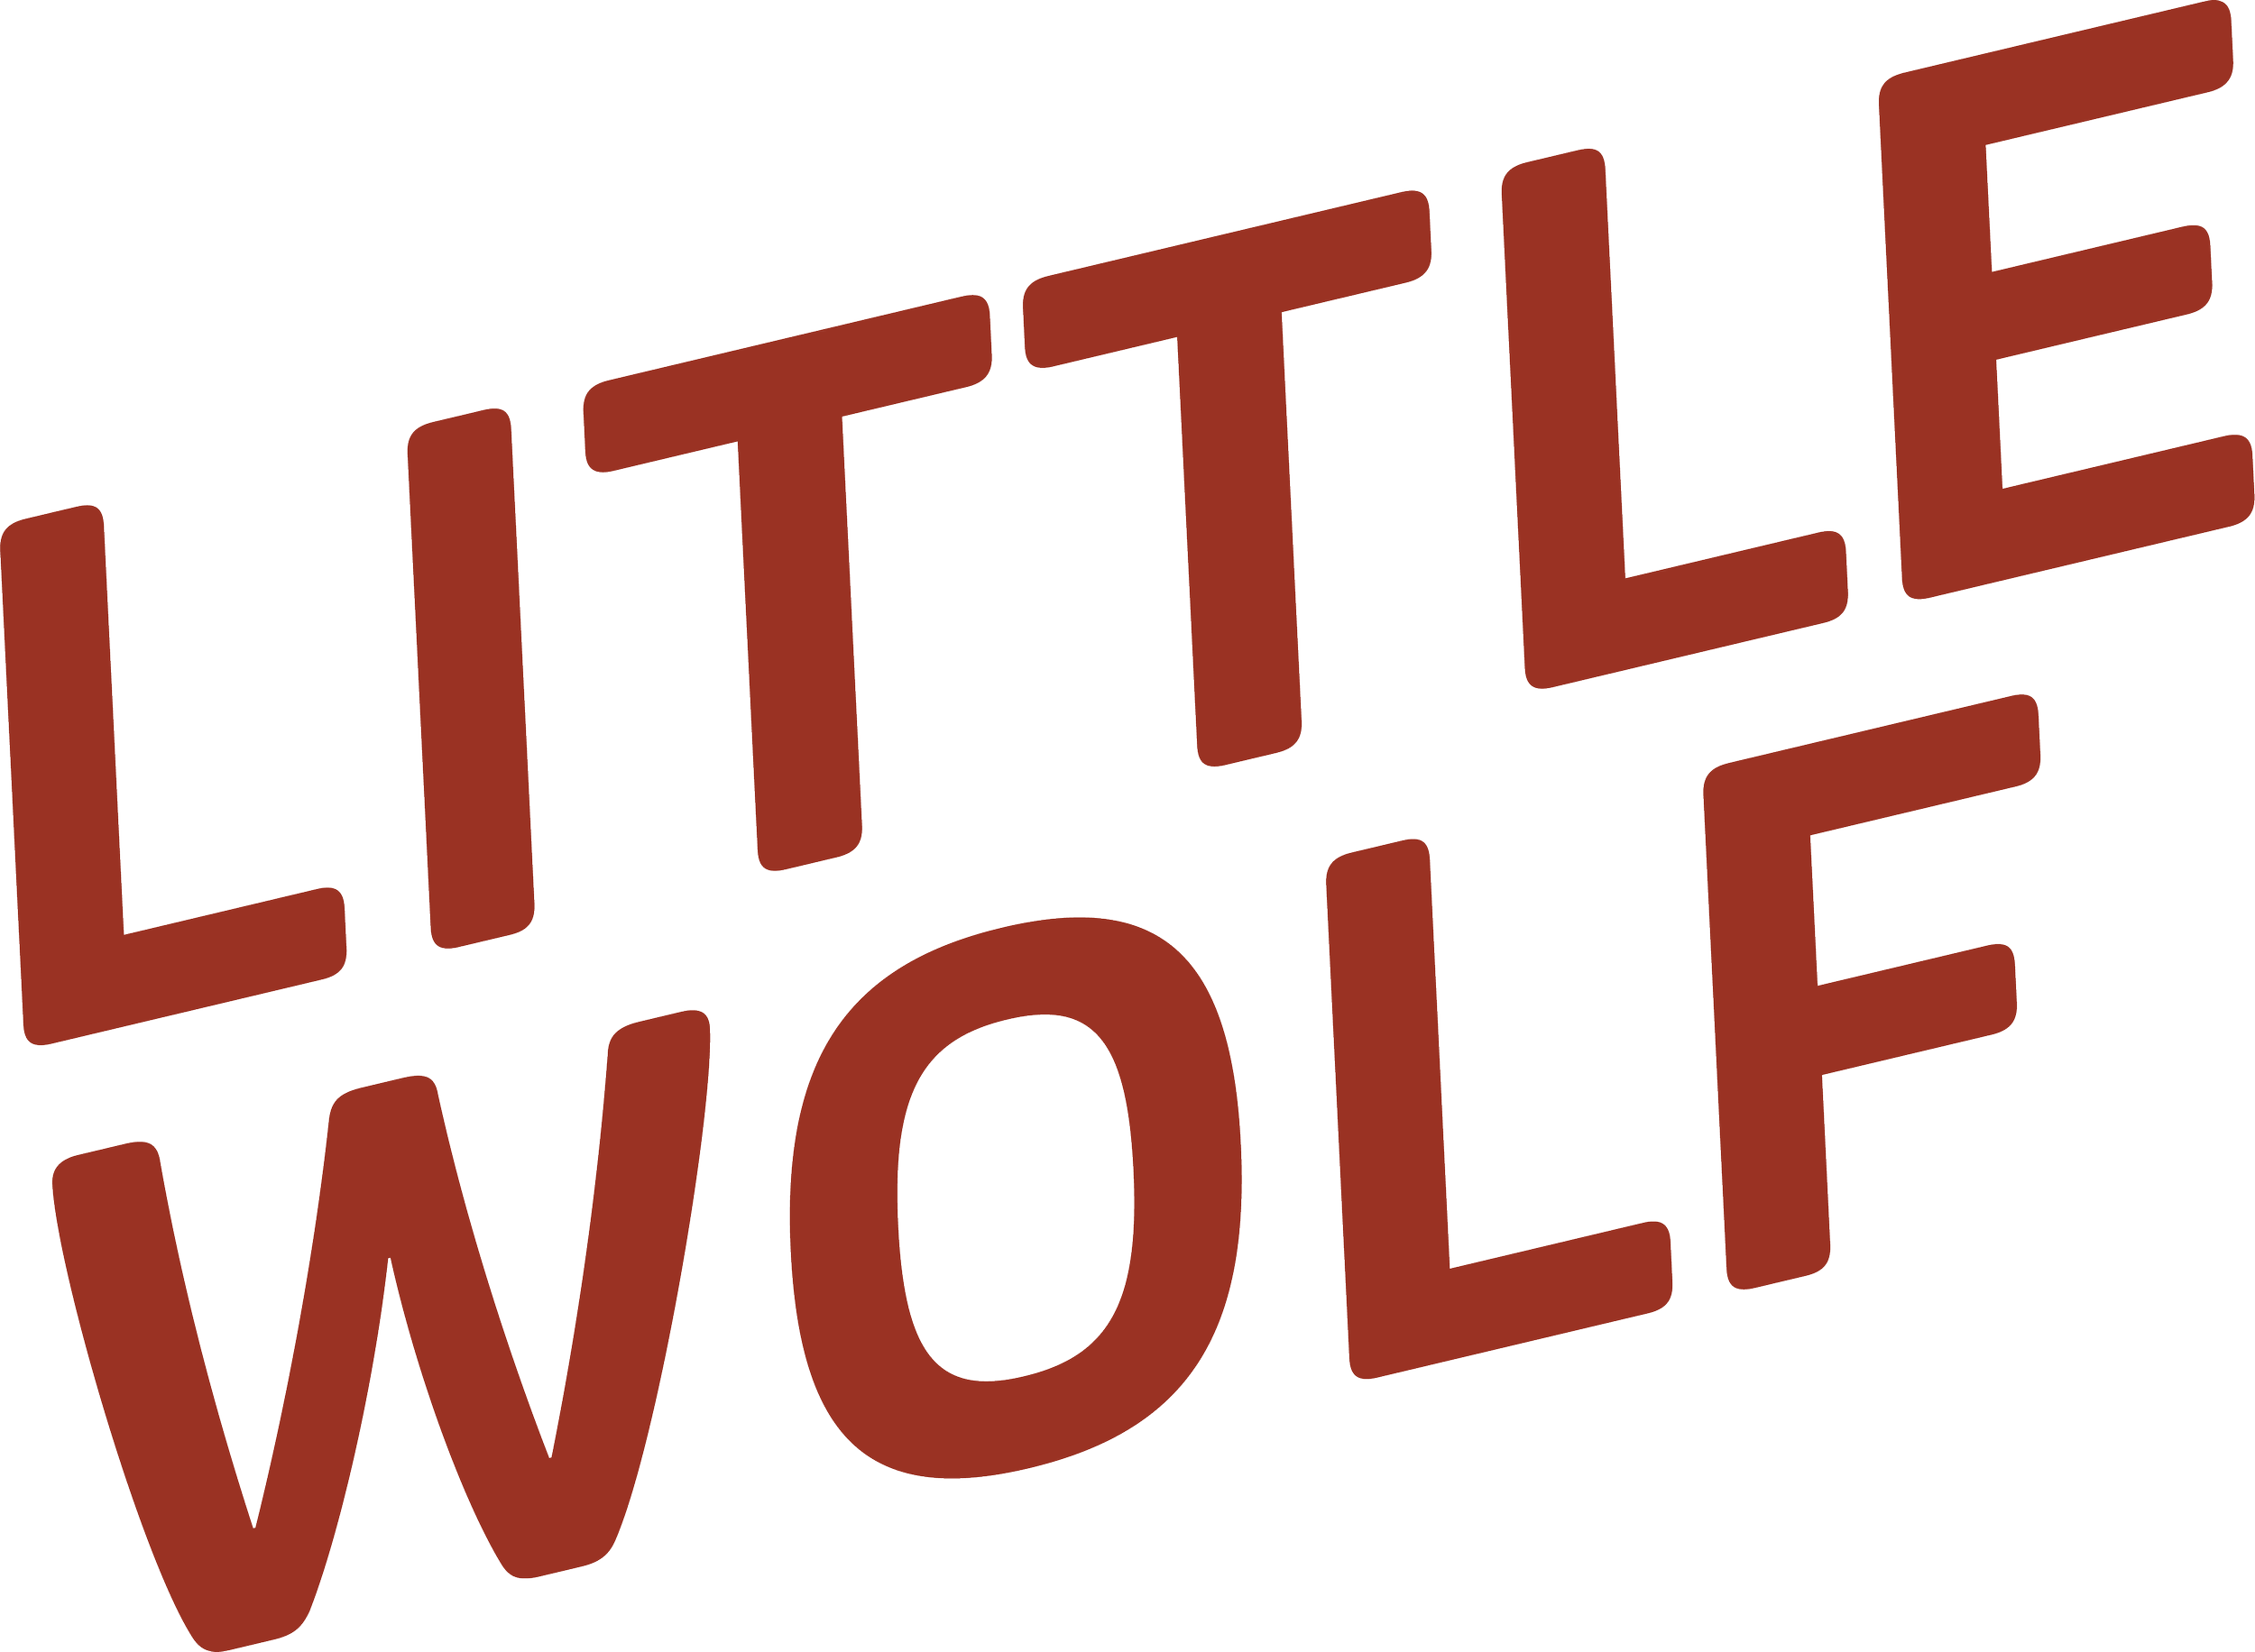 LITTLE WOLF